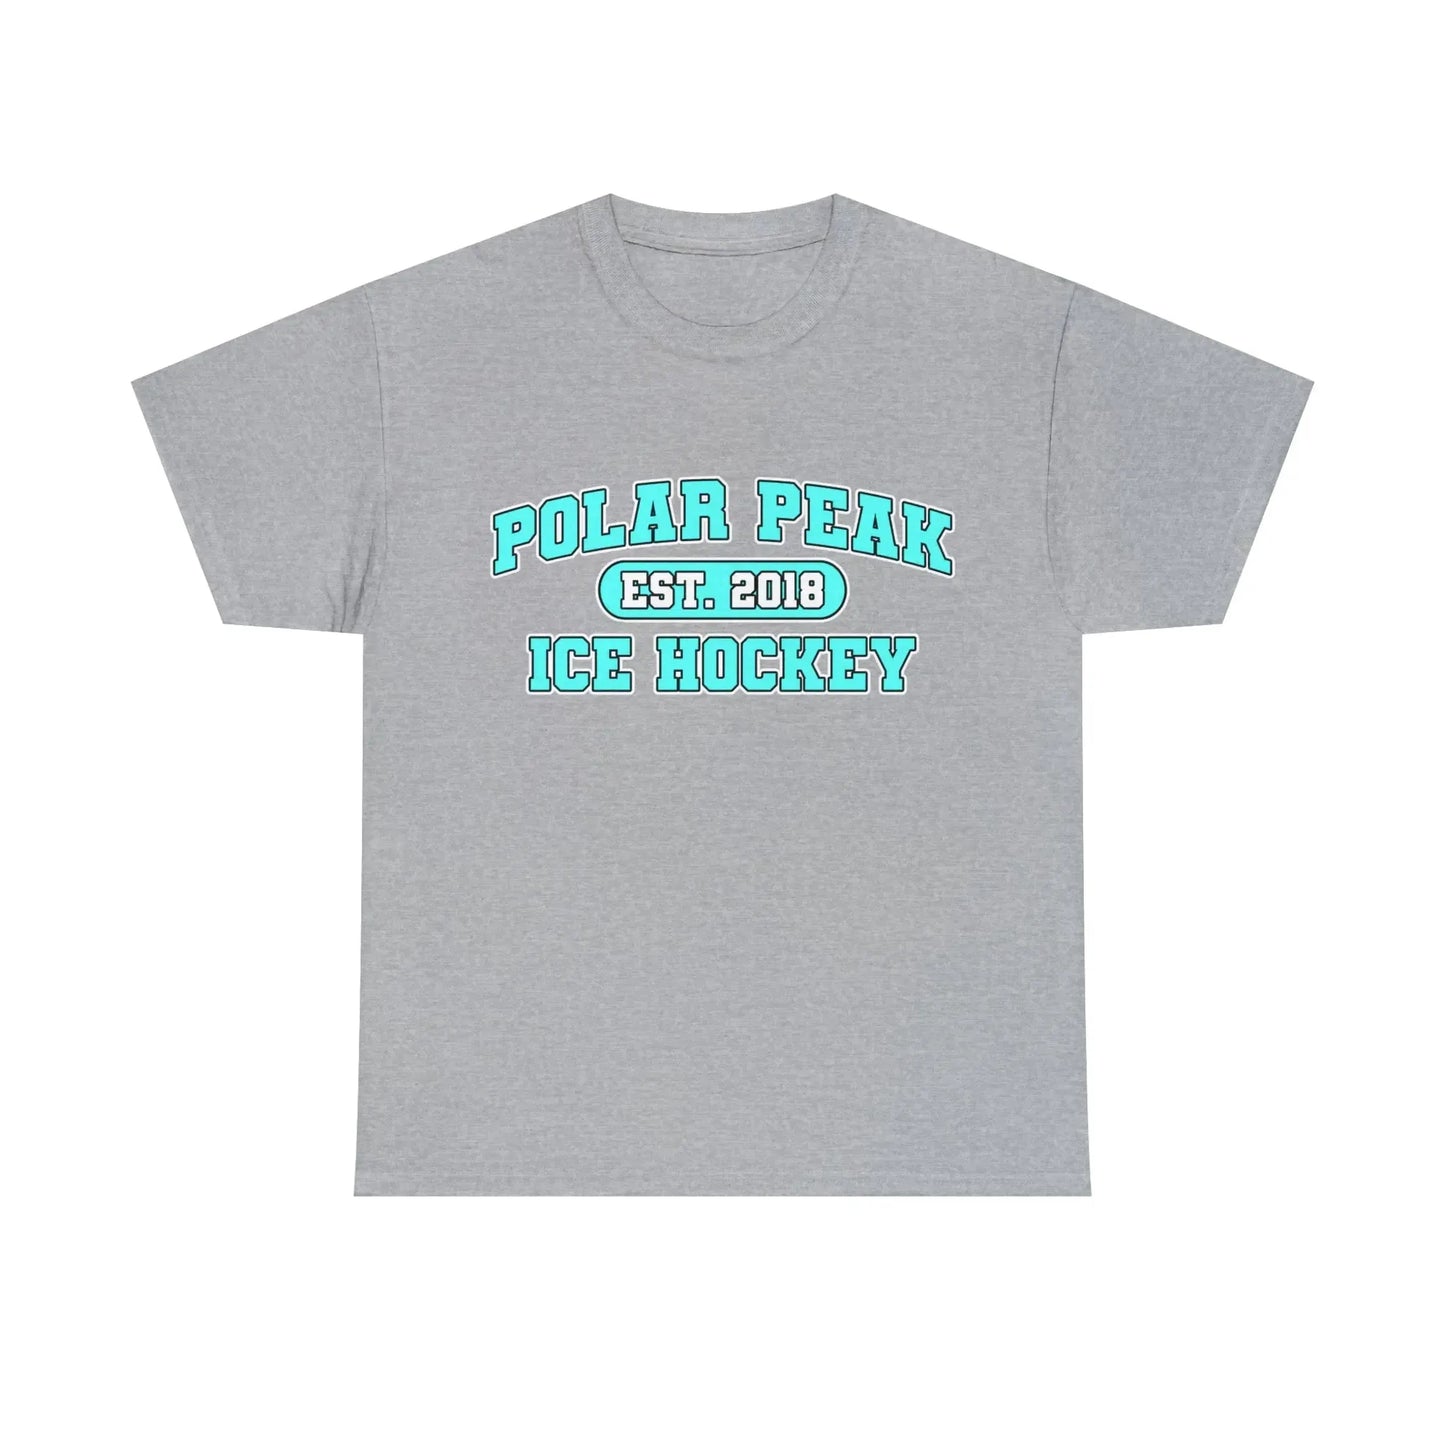 Polar Peak Ice Hockey Team T-Shirt - Failure International failureinternational.com store brand tiktok instagram